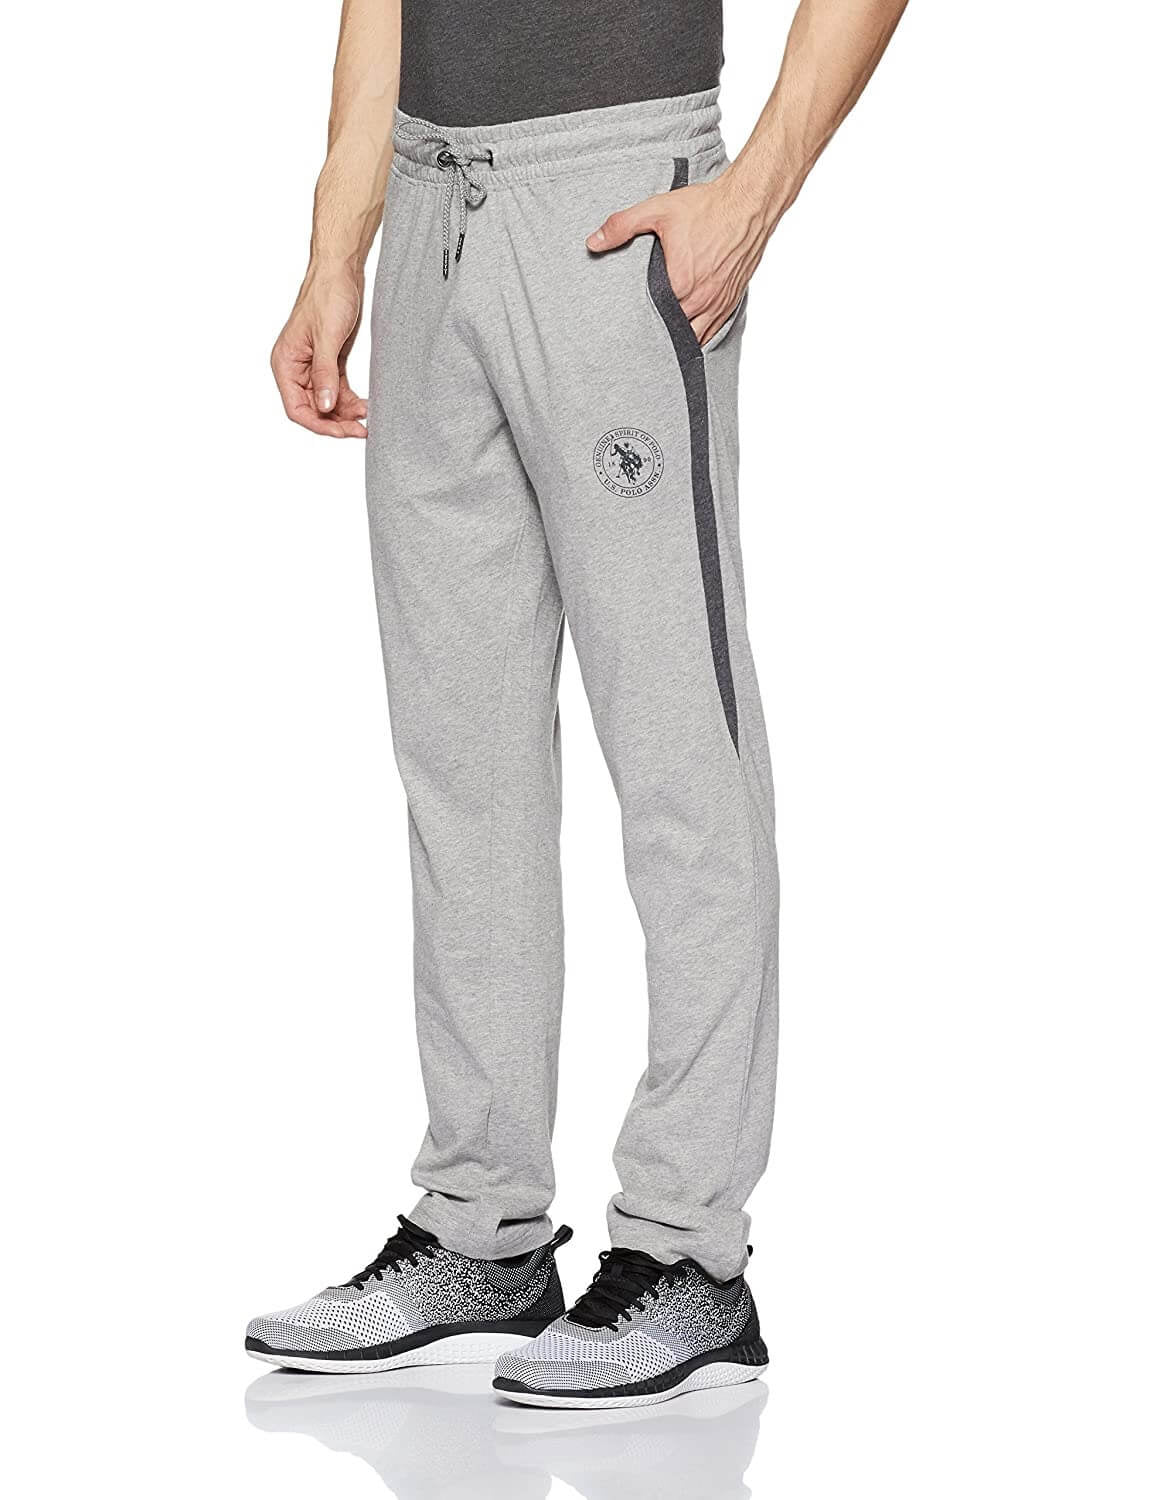 U S Polo Assn Grey Track Pants for Men #I631